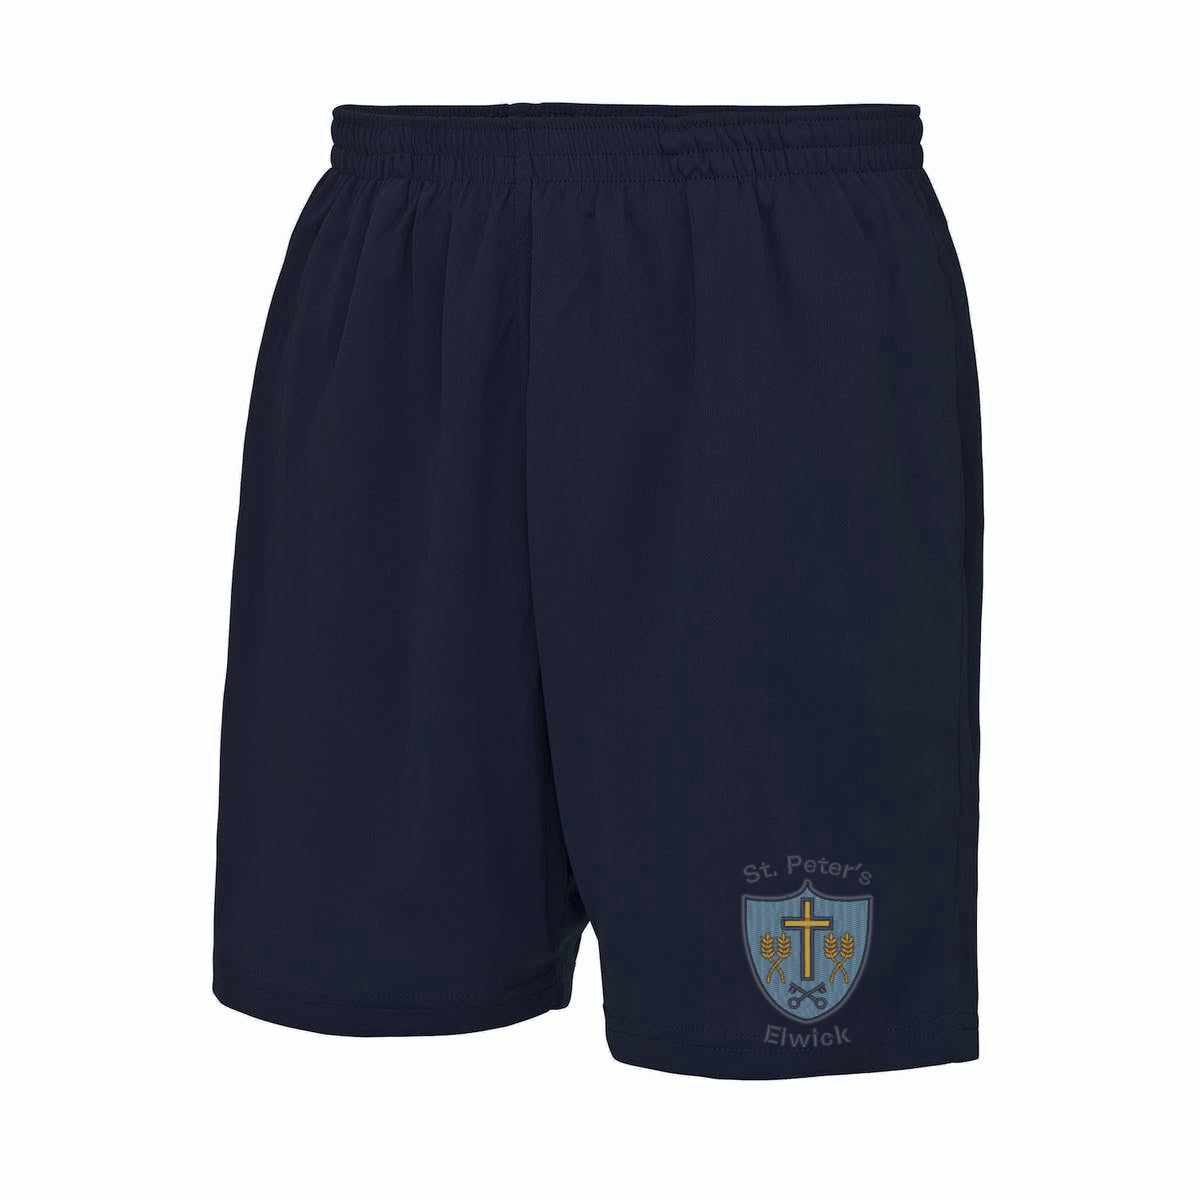 St. Peter's Elwick Navy Sport Shorts